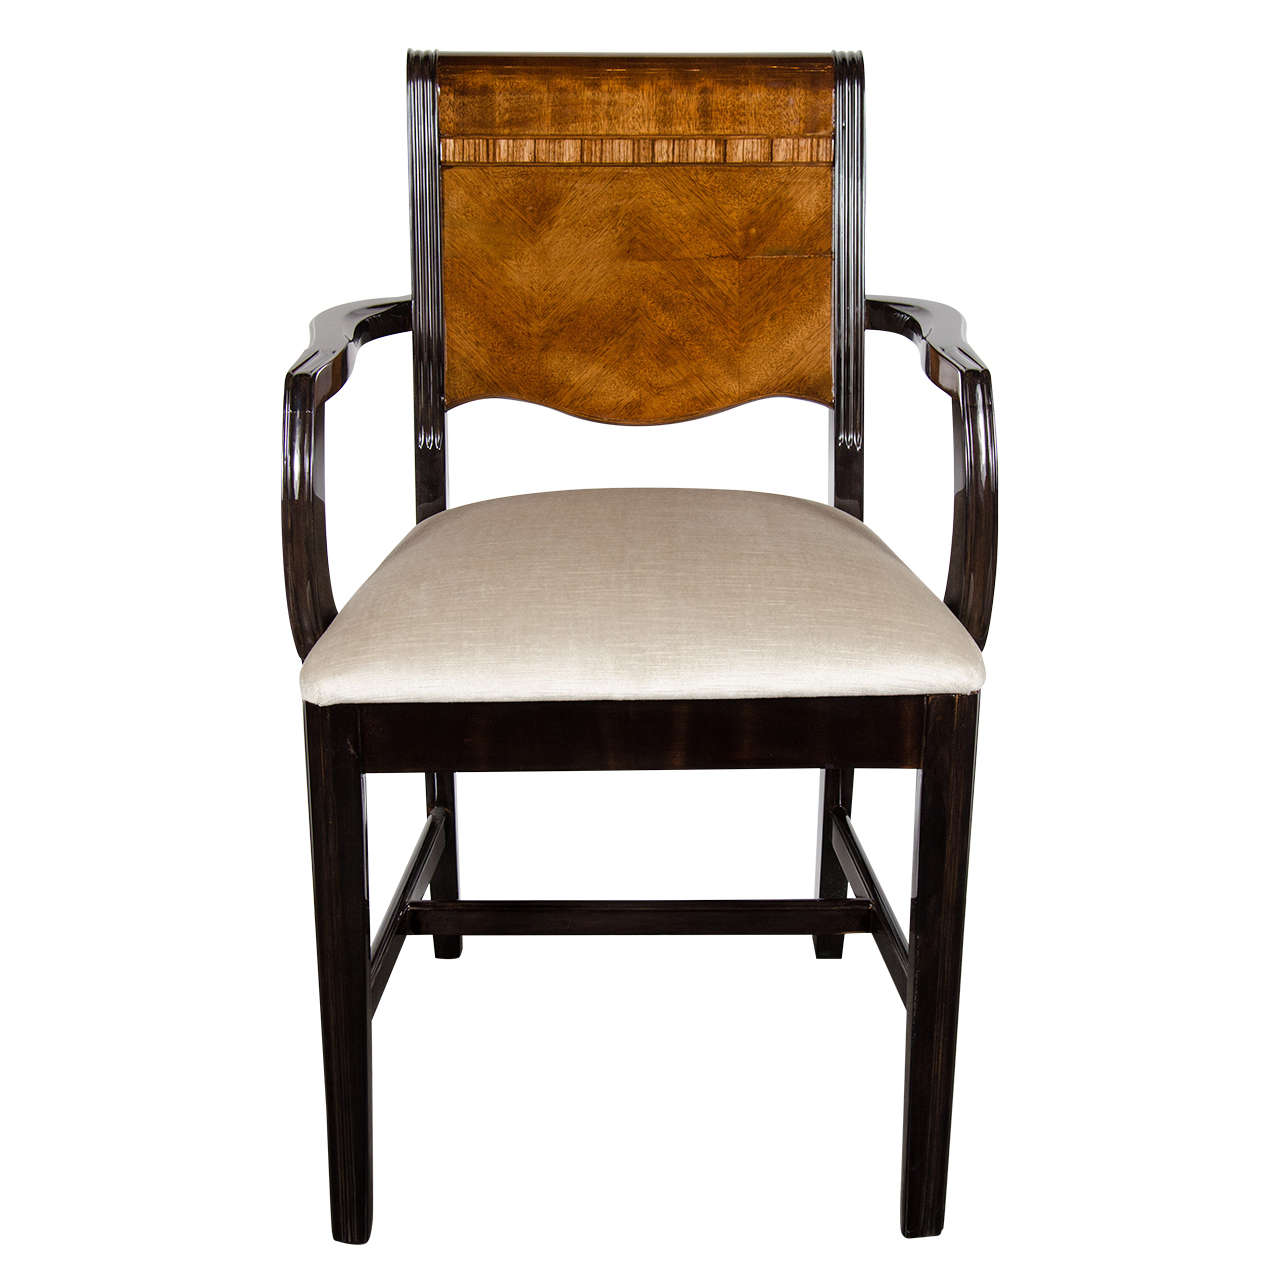 Machine Age Art Deco Streamlined Design Arm Desk Chair